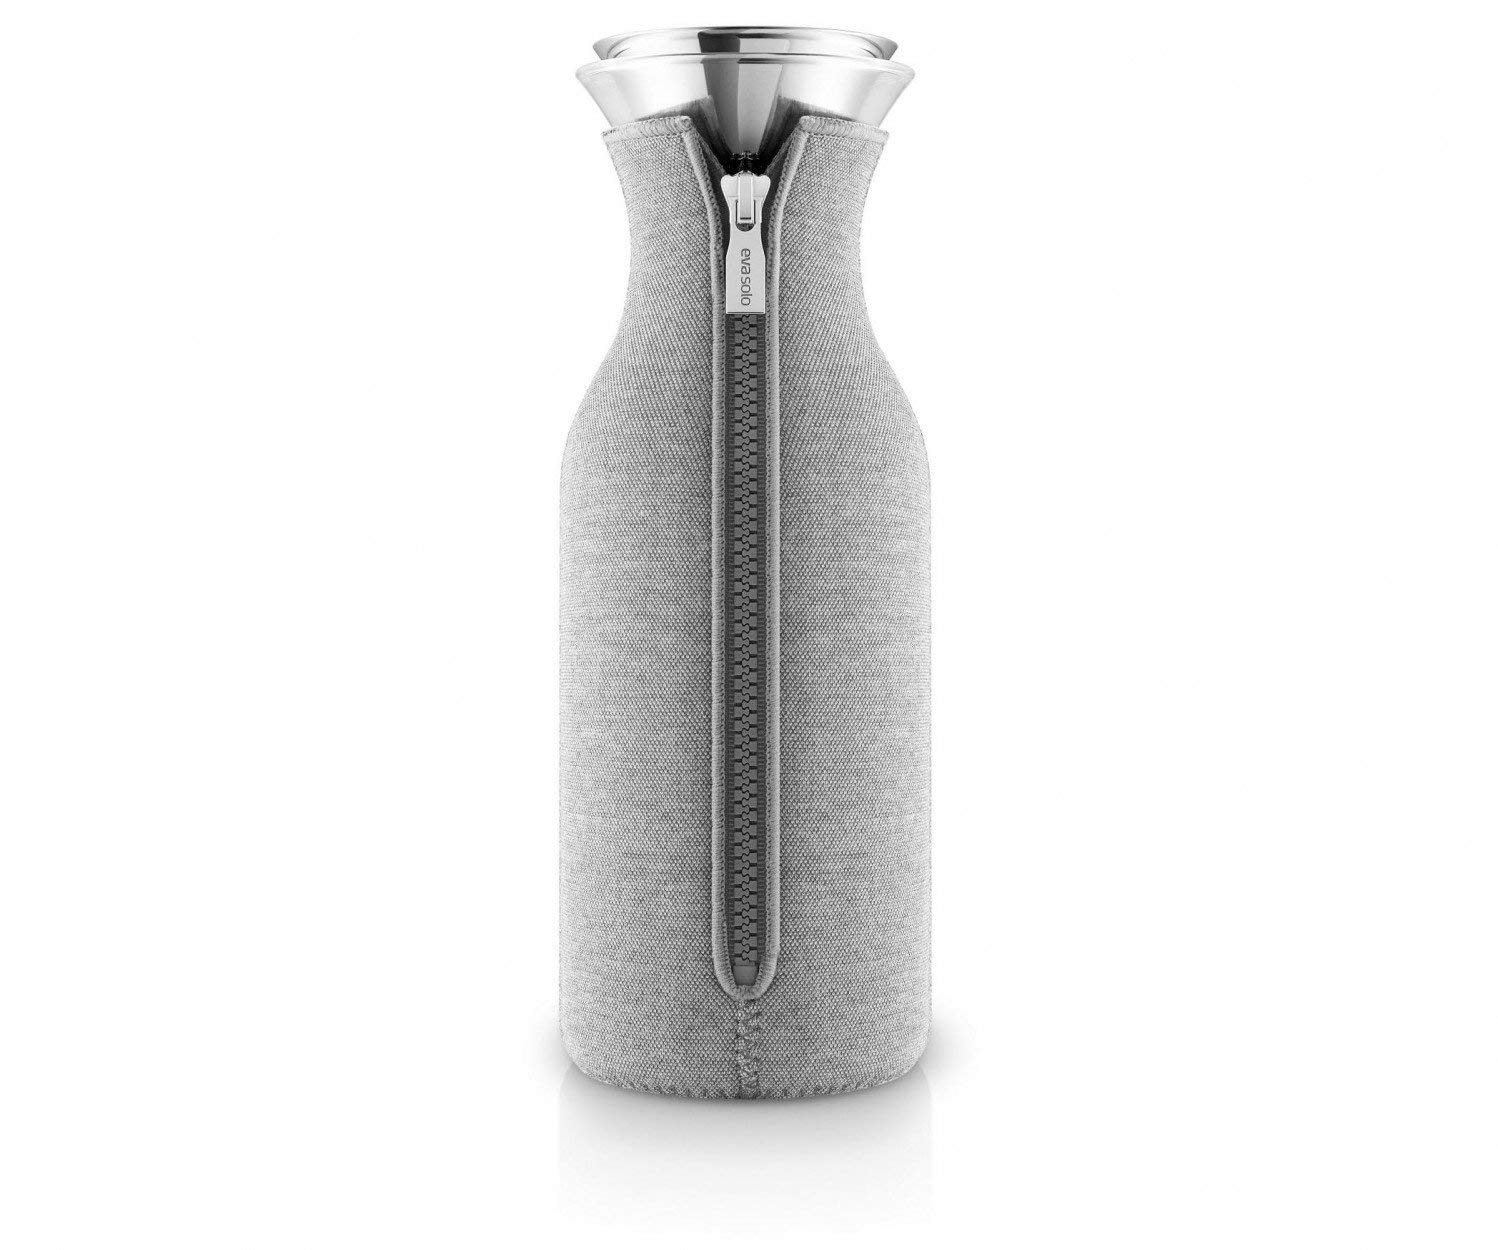 EVA SOLO – Kühlschrankkaraffe | skandinavisches Design | 1 Liter| Borrosilikat-Glas, Edelstahl, Silikon | spülmaschinenfest | 100% tropffrei – Light Grey woven 1.0 l